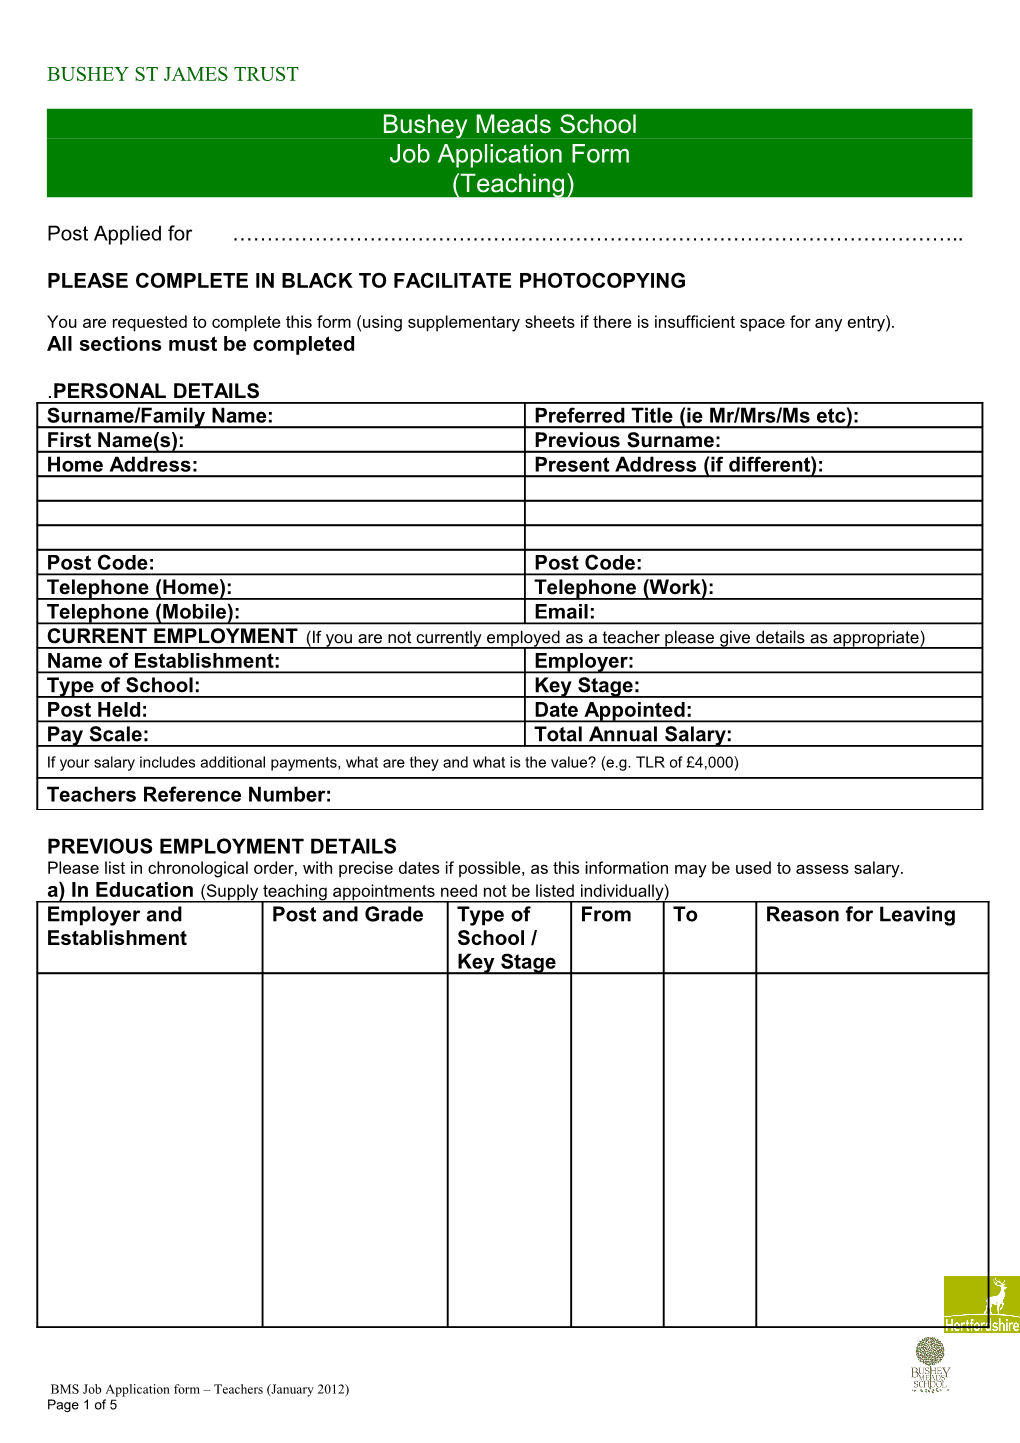 Hertfordshire County Council Job Application Form - Teaching (Teaching) s1